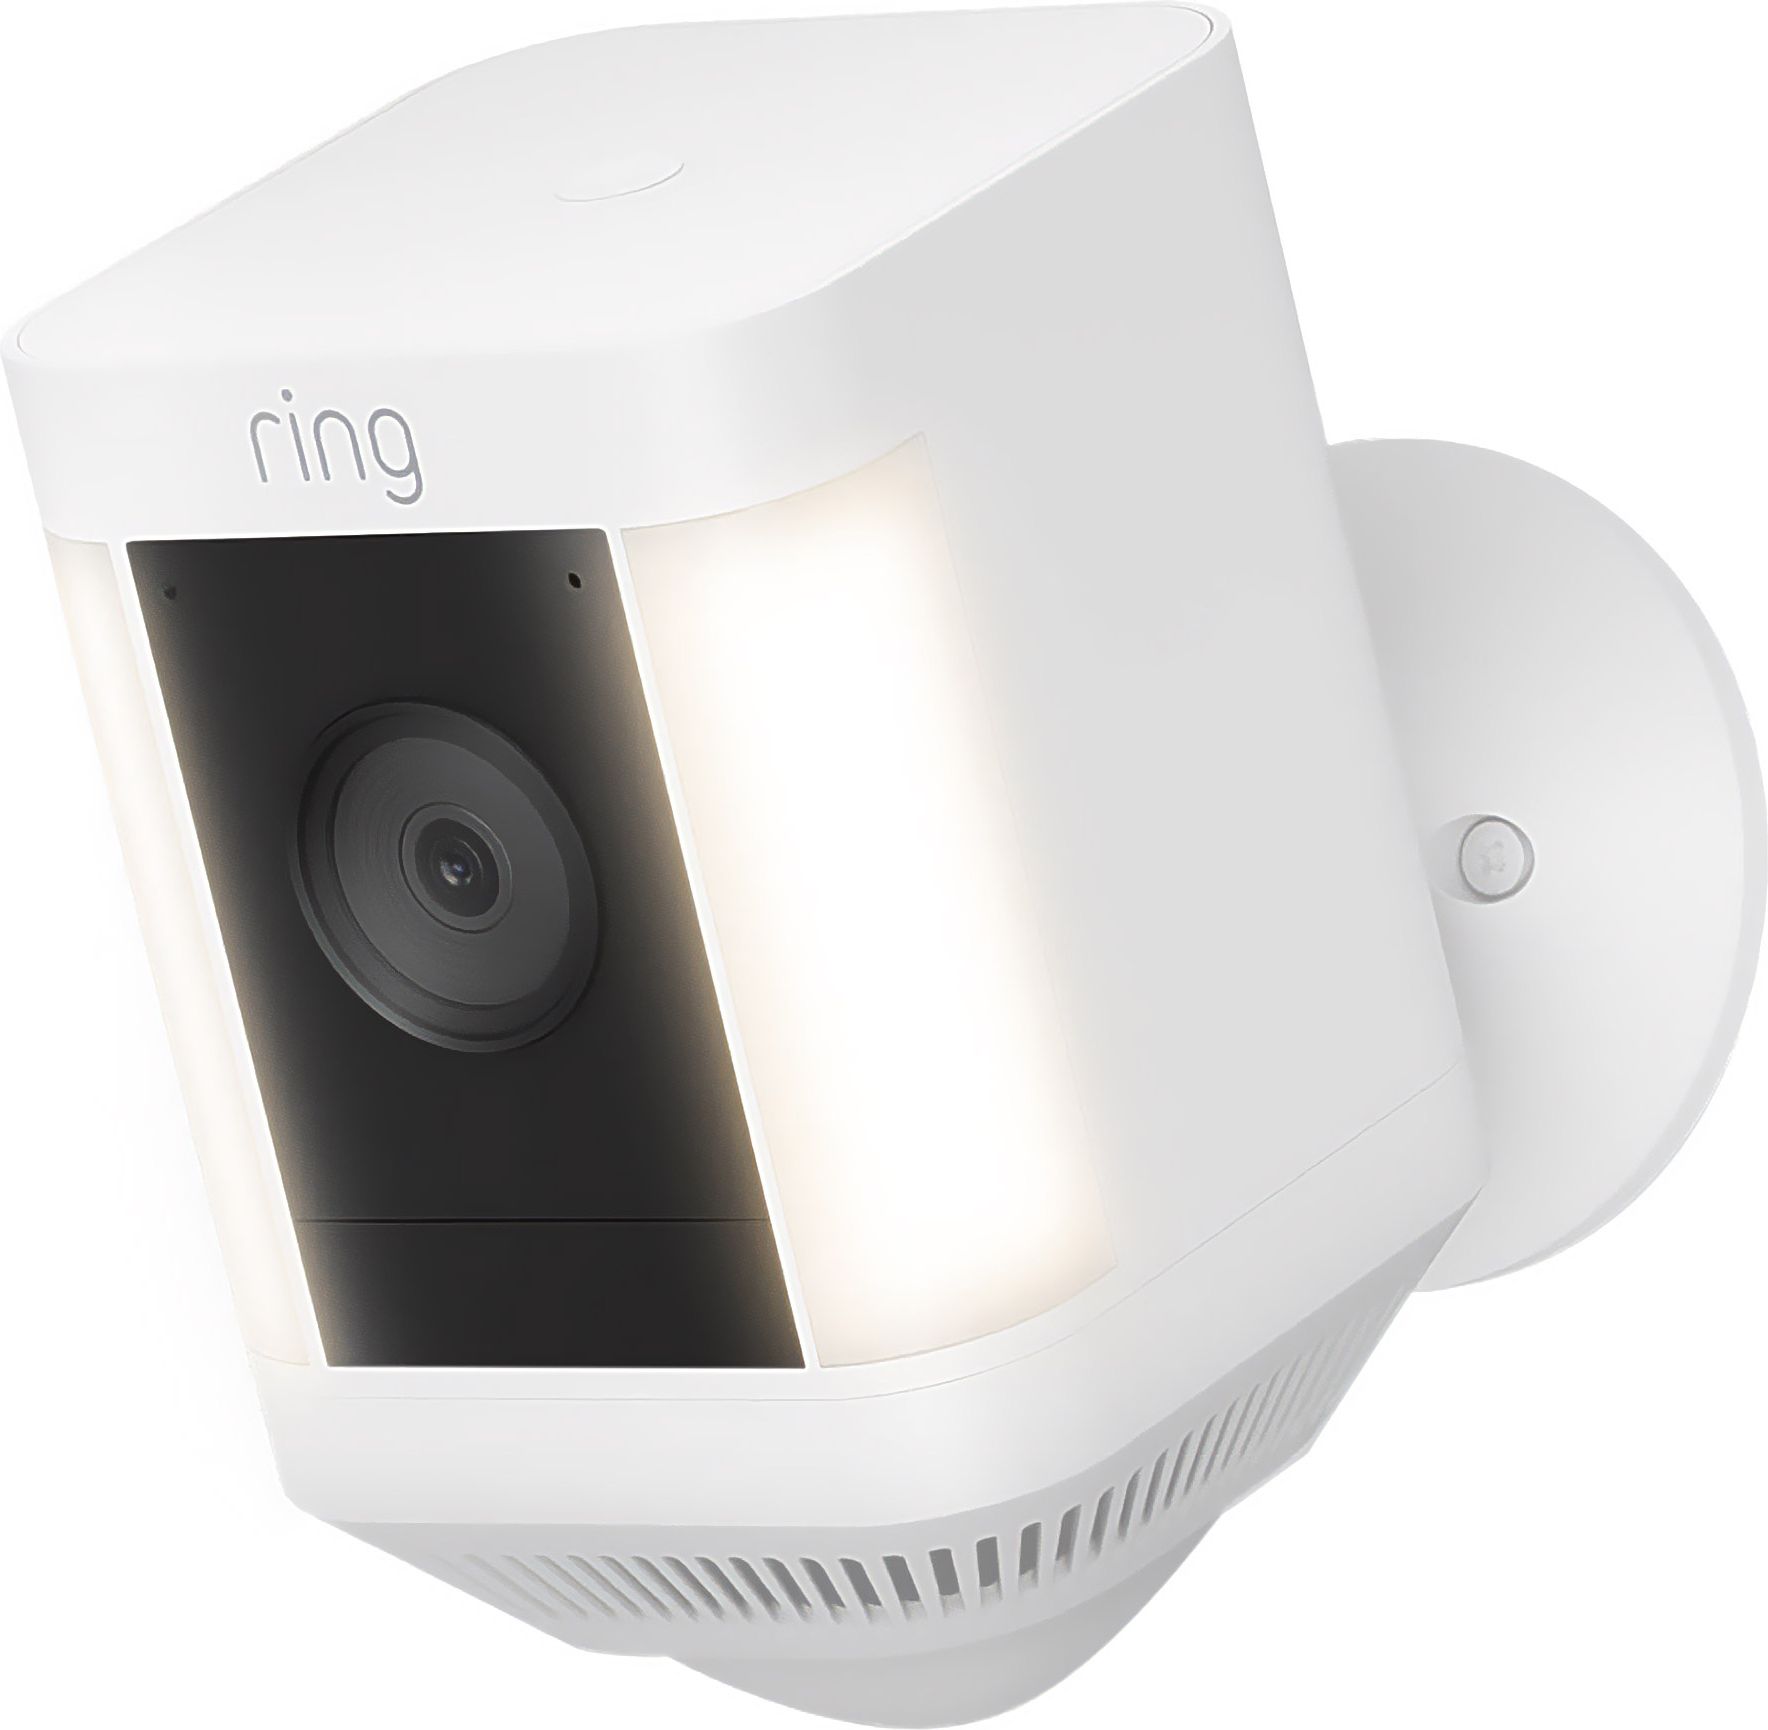 Ring Plug-In Spotlight Cam Plus Full HD 1080p Smart Home Security Camera - White, White